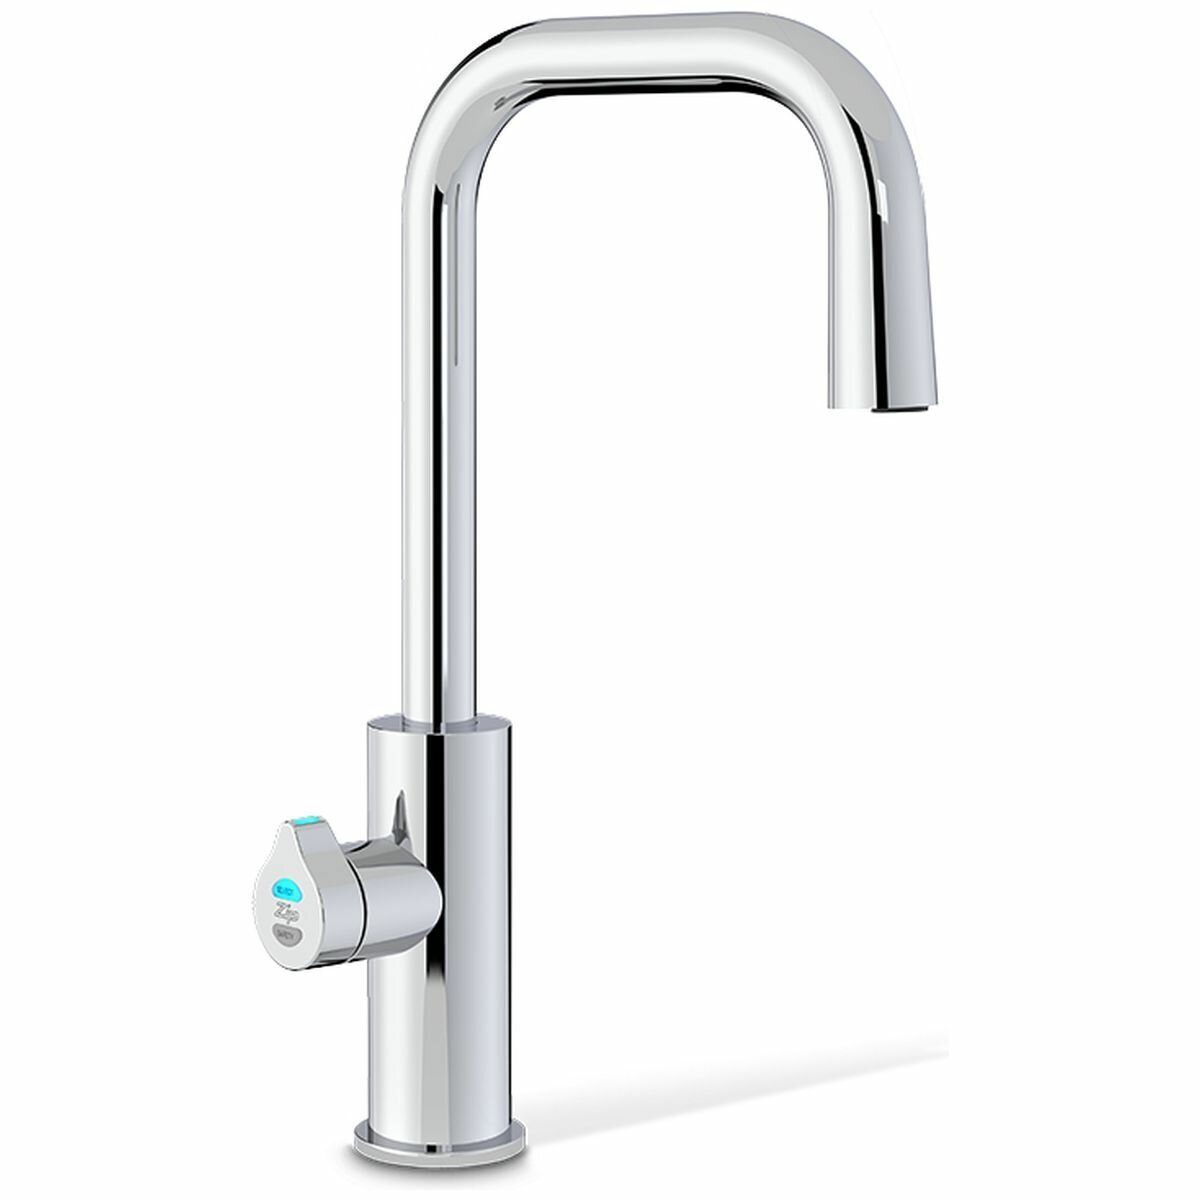 Australia's leading water filter tap, Zip HydroTap